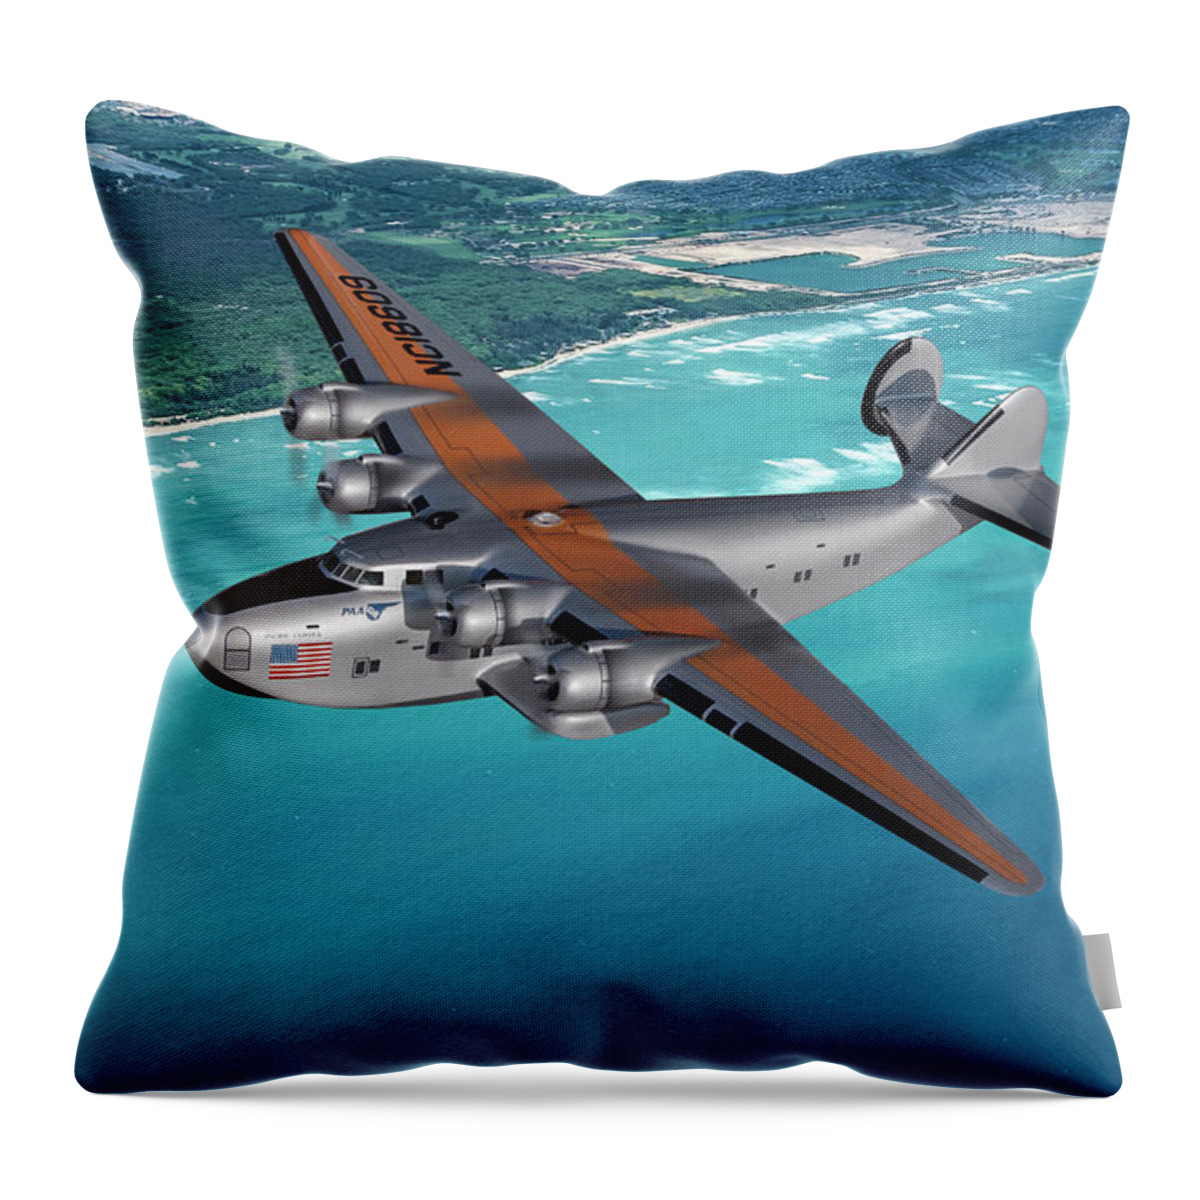  Throw Pillow featuring the digital art Pan Am Clipper Flying Boat by Erik Simonsen